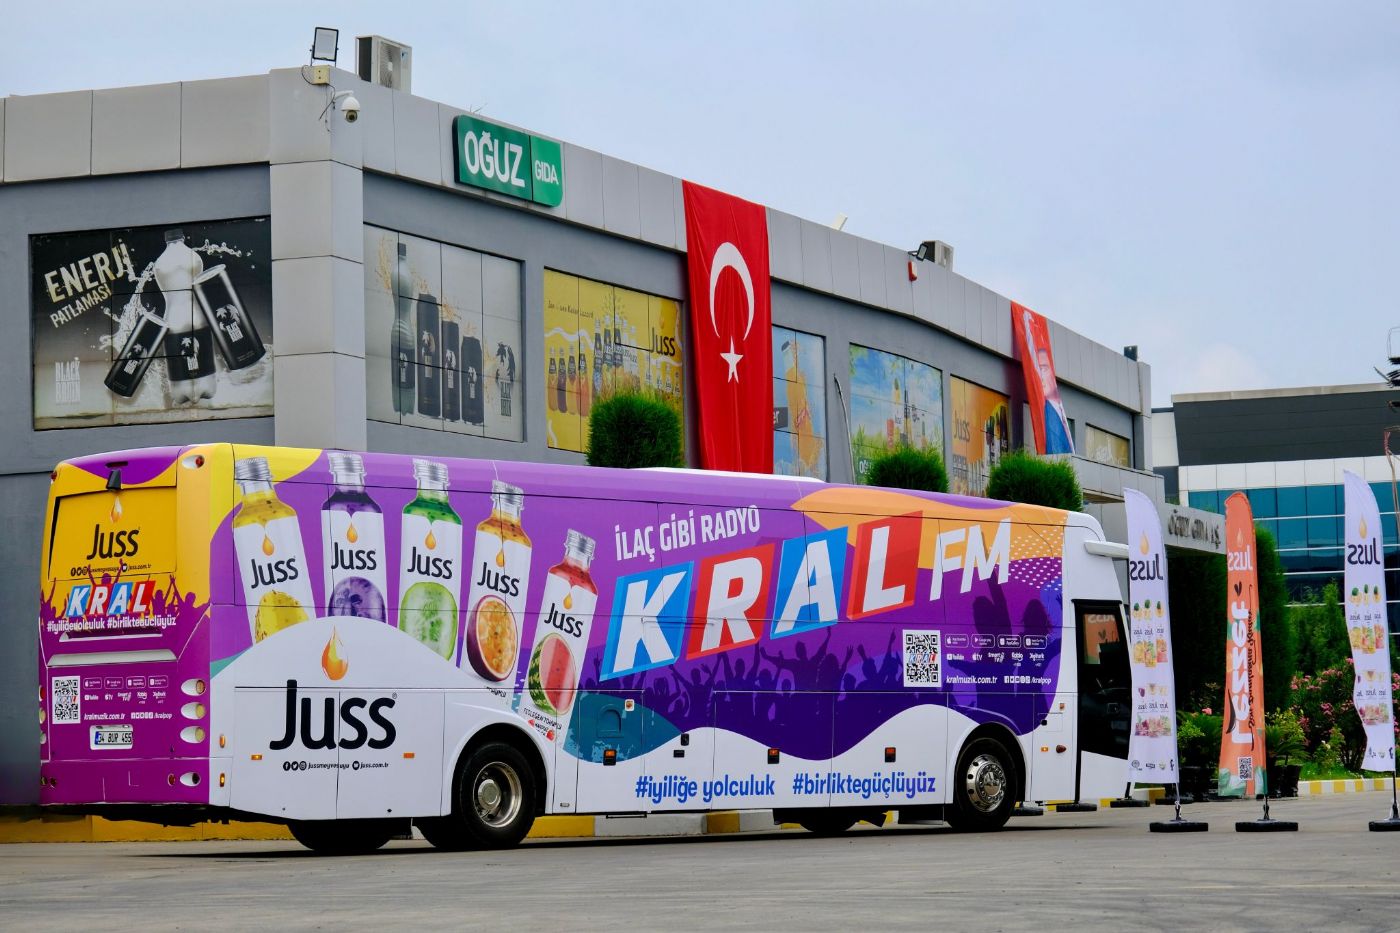 Juss Meyve Suları  Juss & Kral Fm journey to goodness